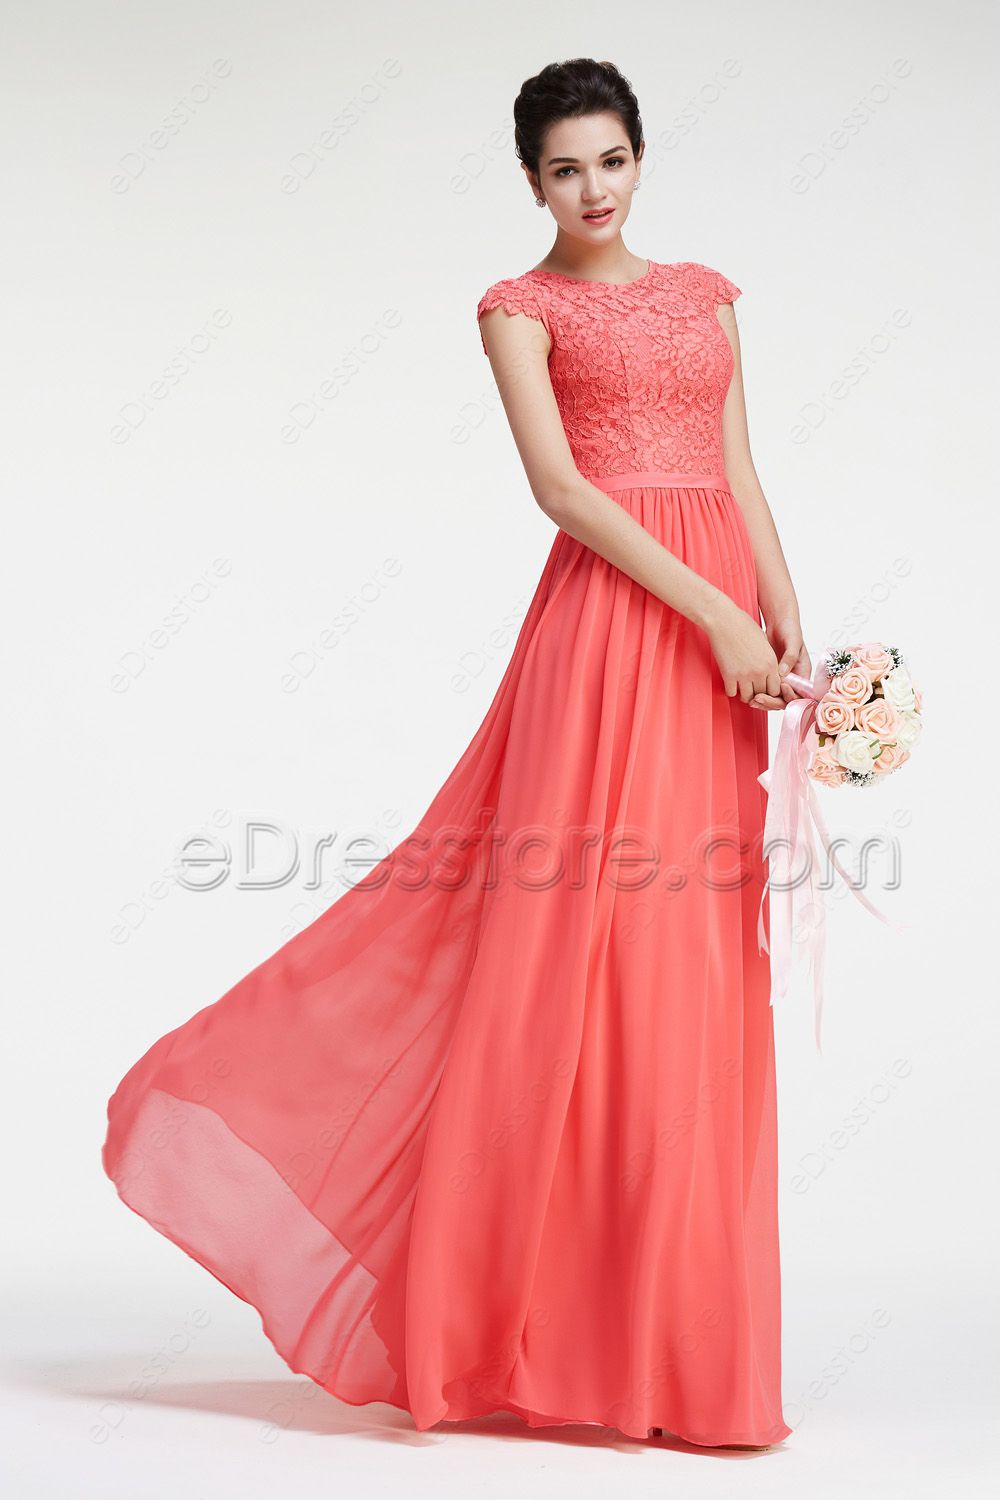 Lace Chiffon Modest Coral Bridesmaid Dresses Cap Sleeves | eDresstore